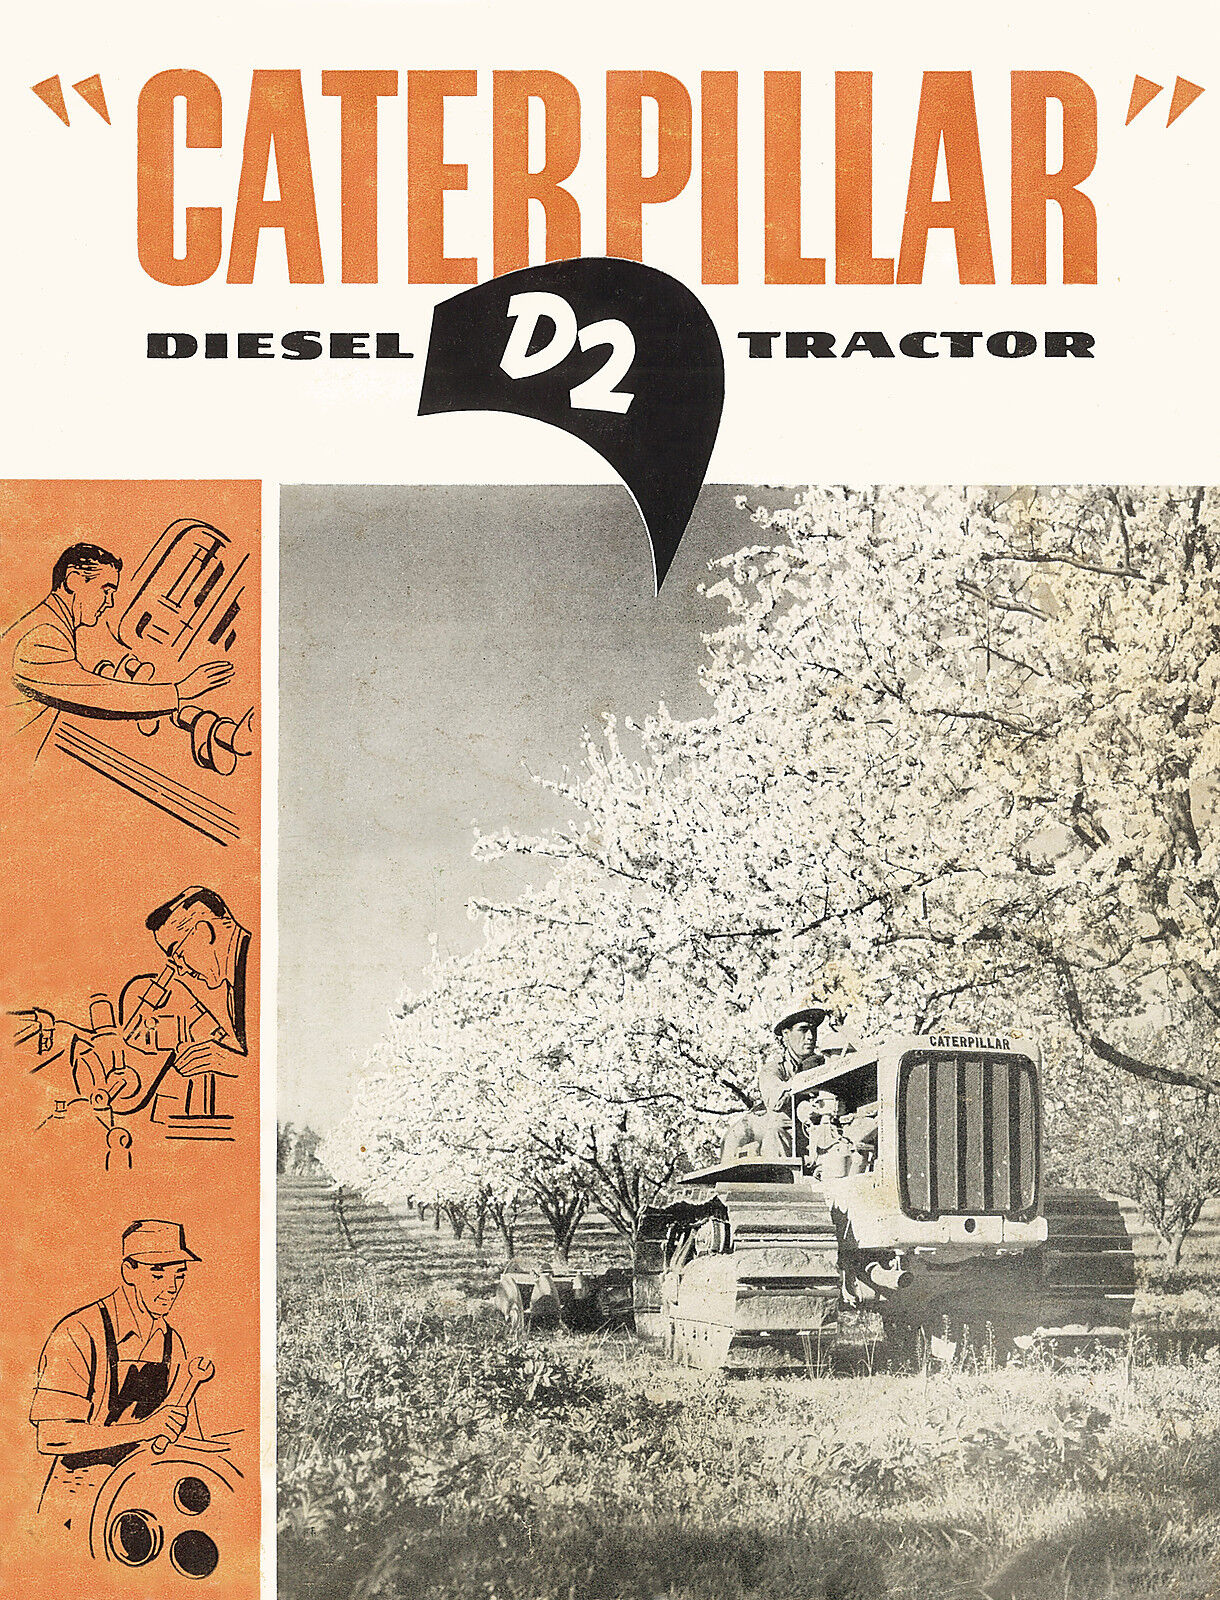 Caterpillar D2 Diesel Tractor Sales Book 1951